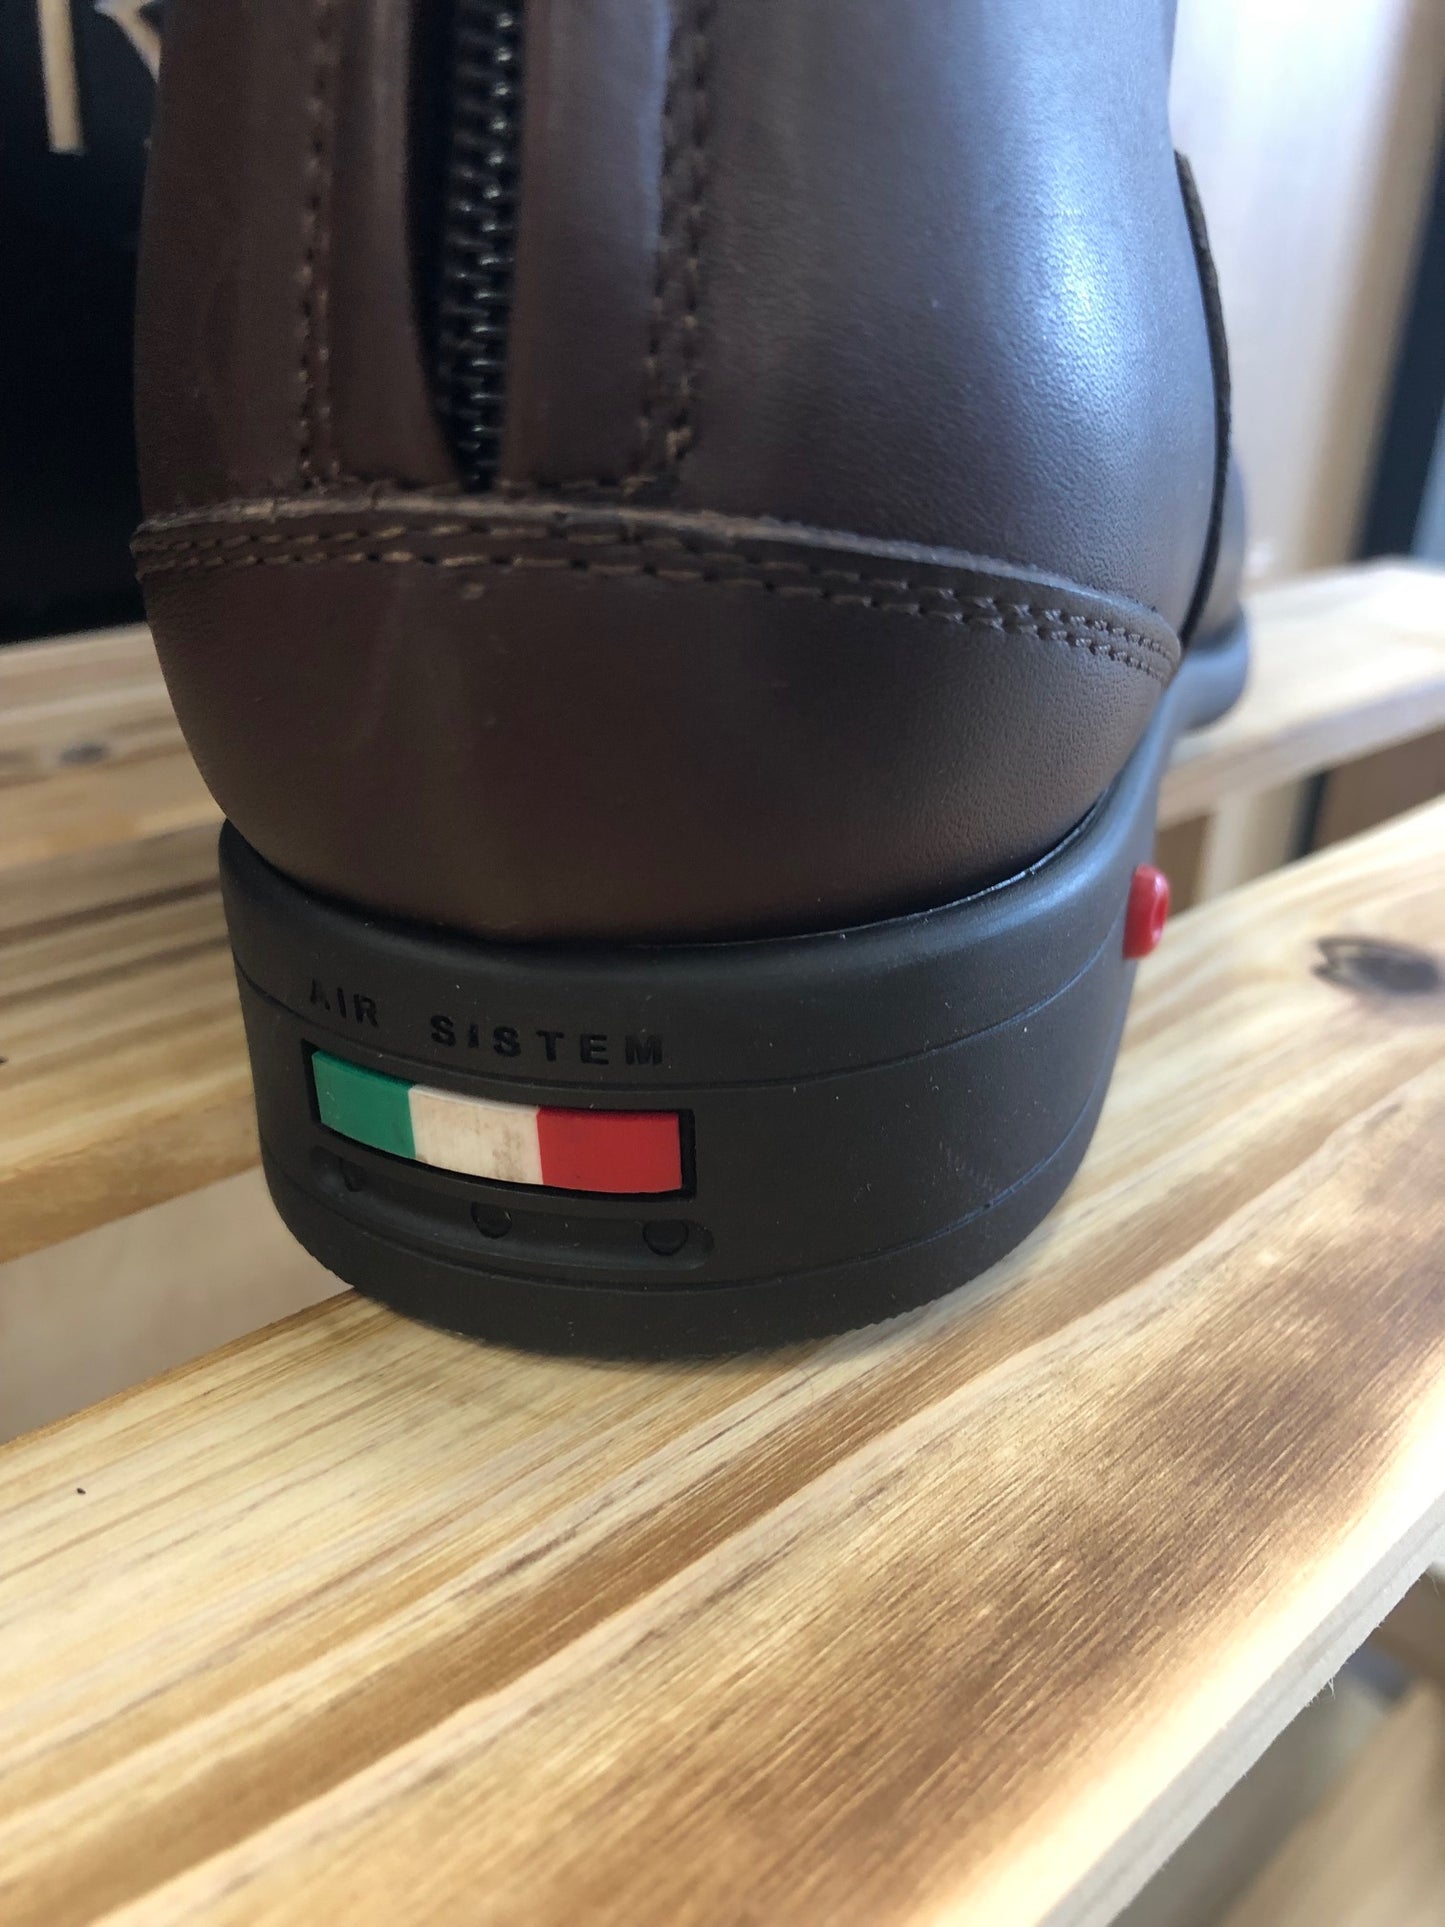 Boots Fellini 1732 marron